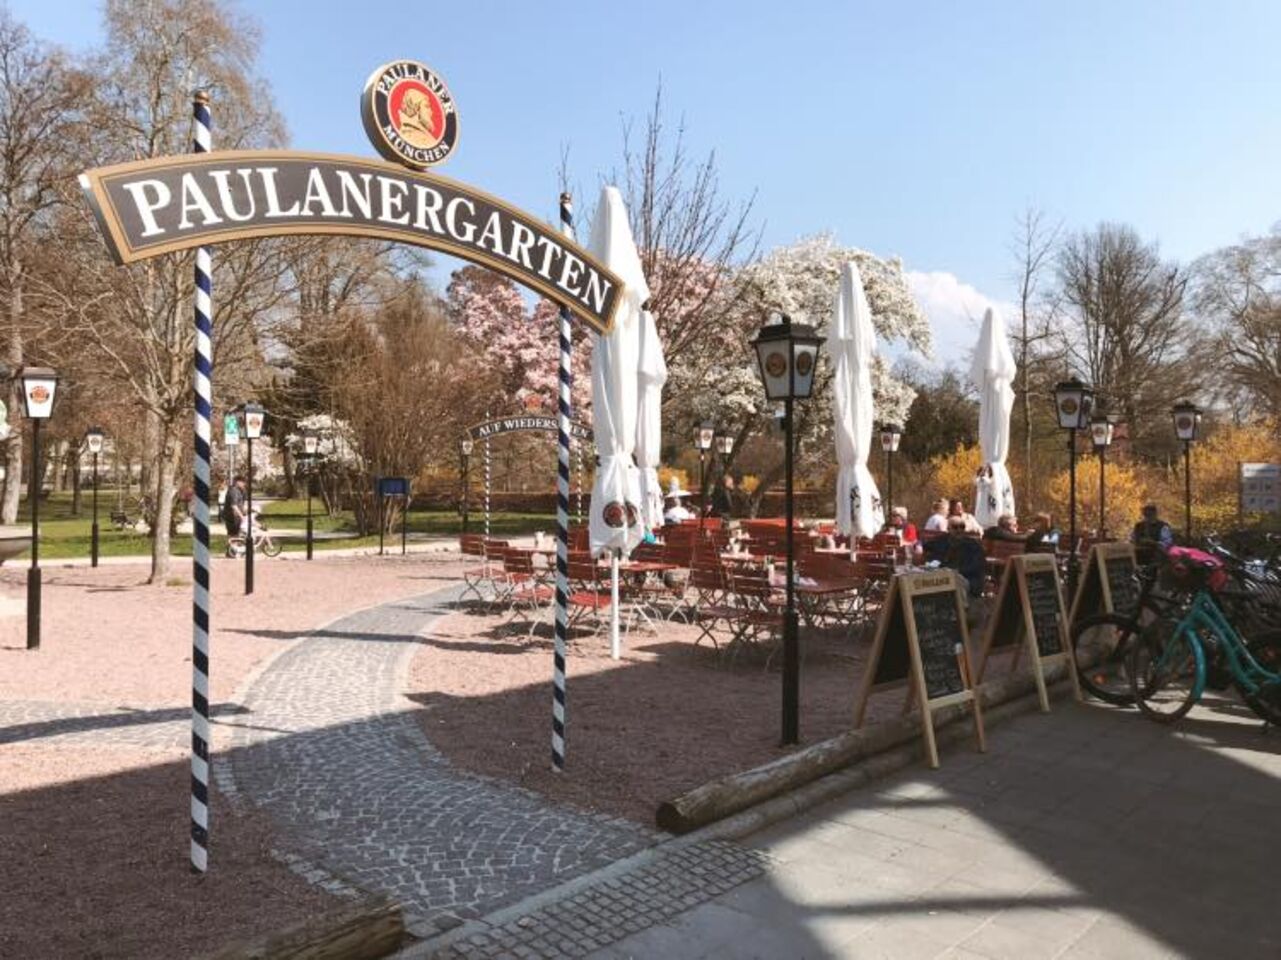 A photo of Paulanergarten